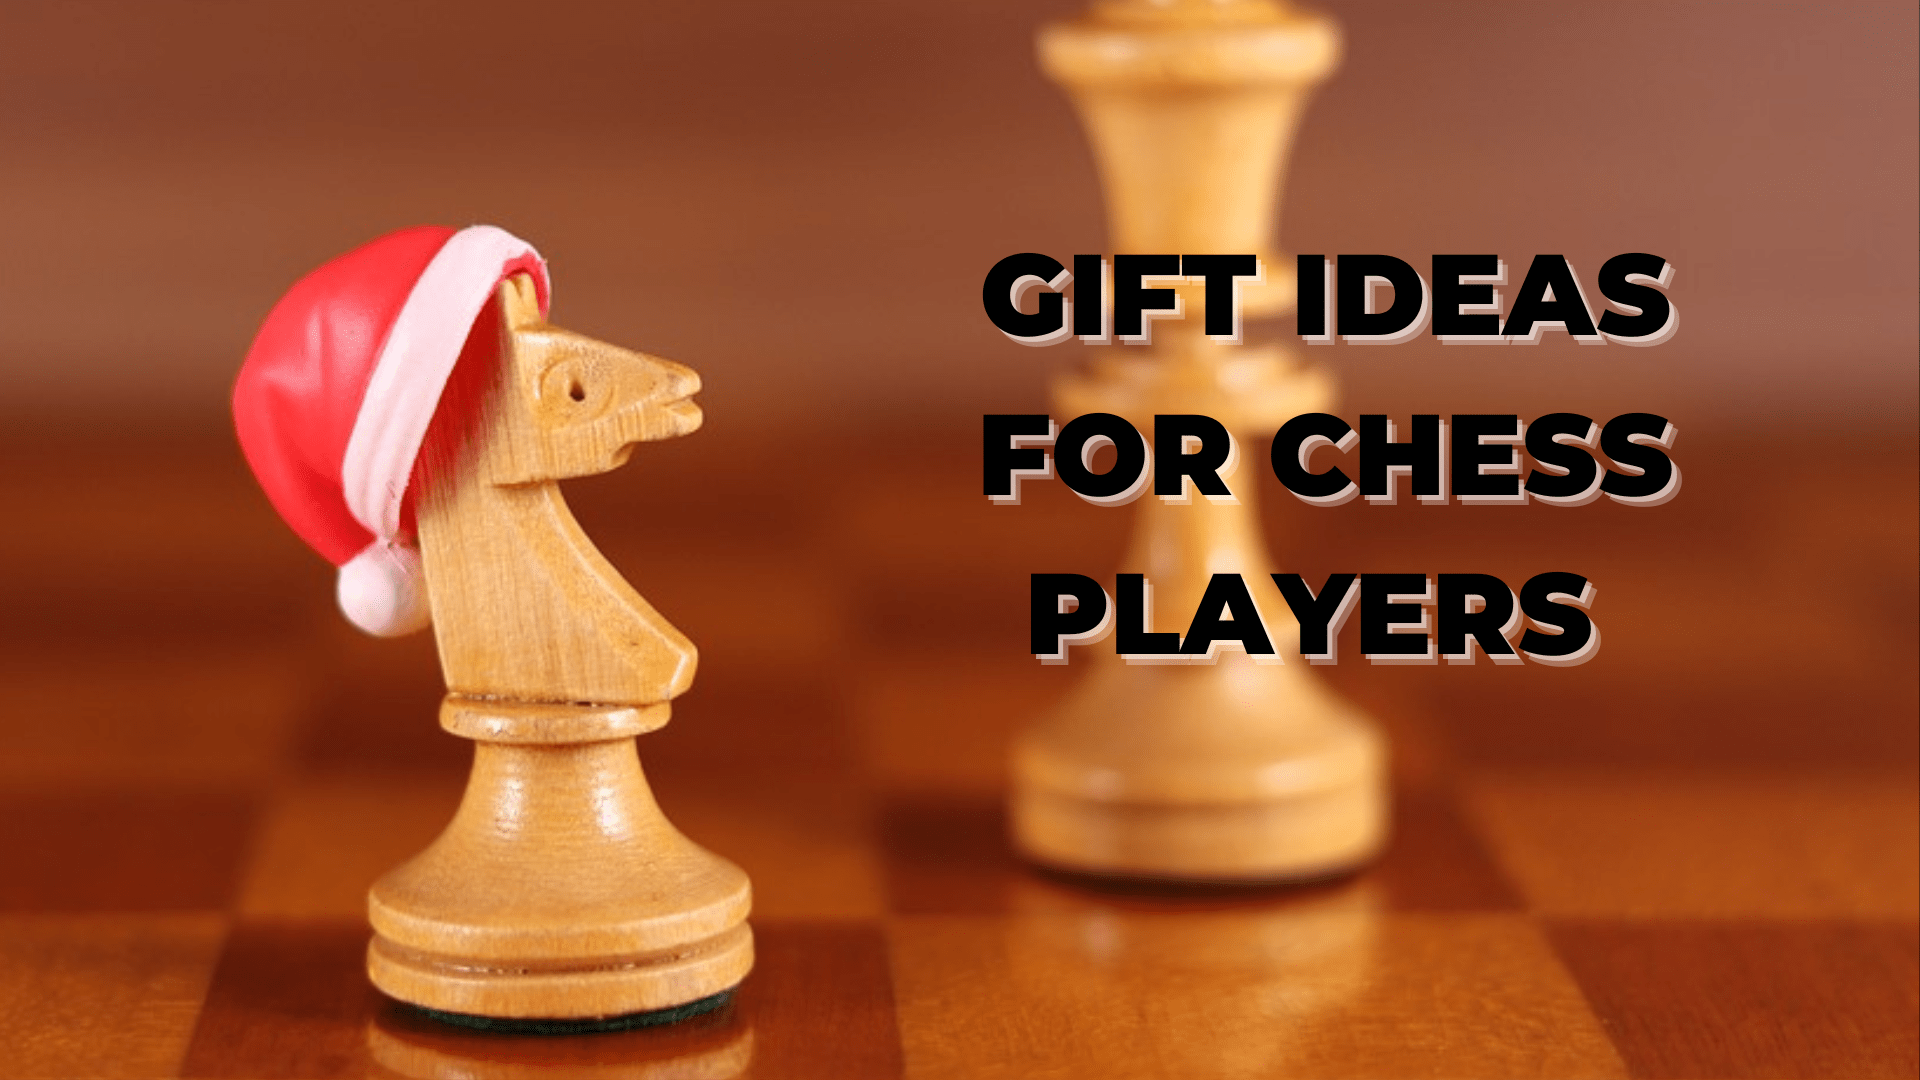 Create meme boy player, chess championship, chess player - Pictures - Meme -arsenal.com